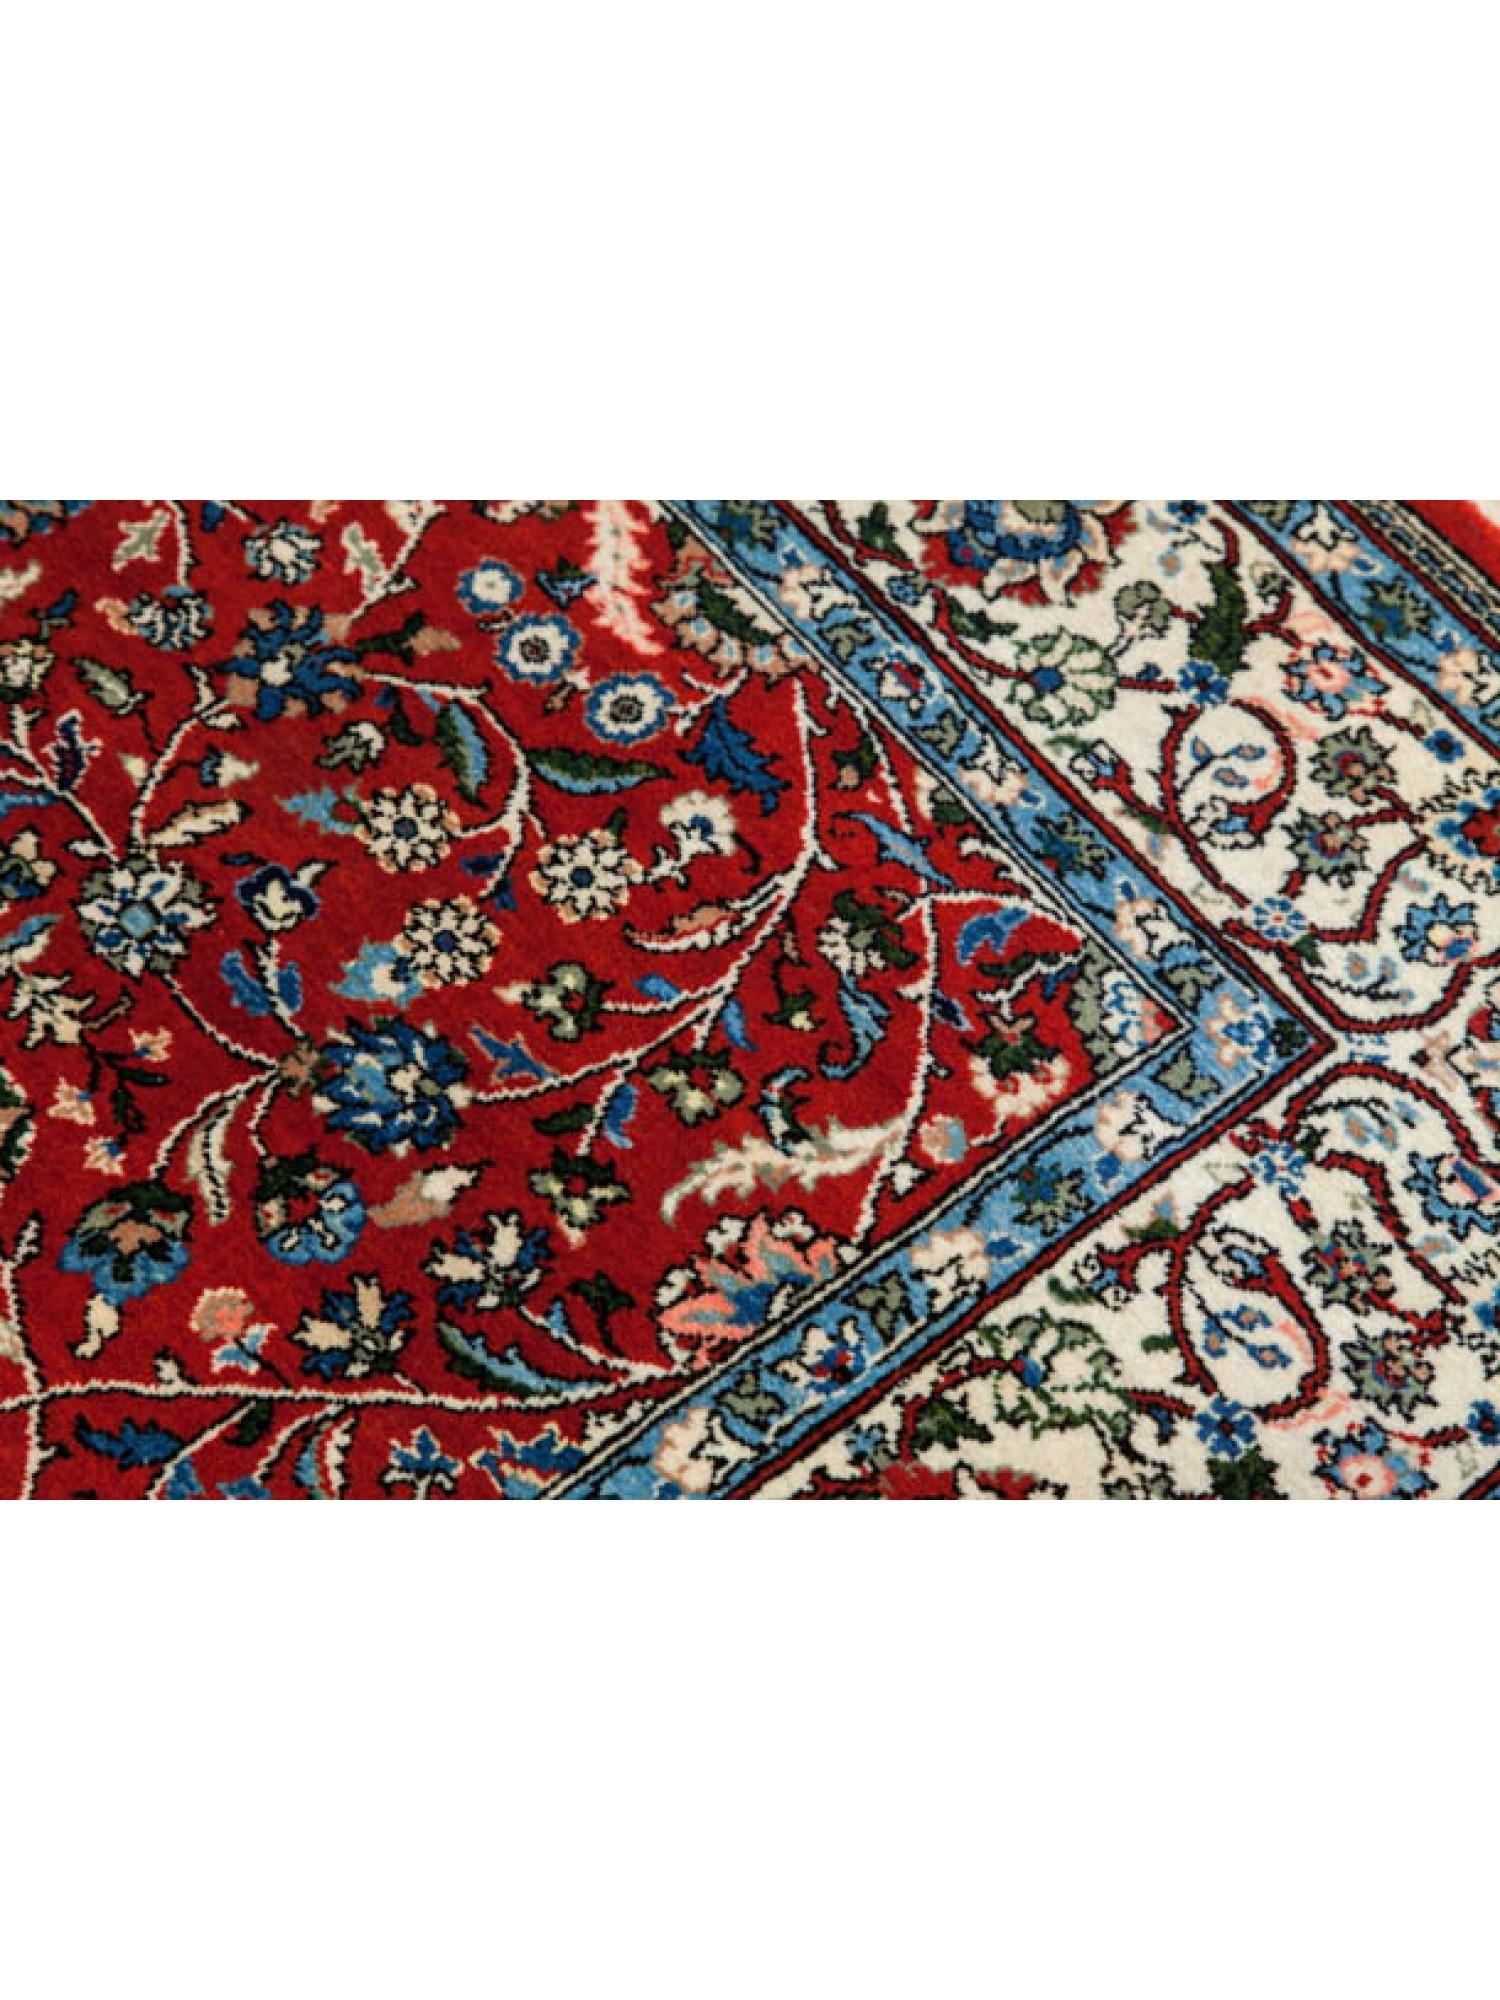 Contemporary Hereke Wool & Cotton Carpet, Turkish Anatolian Rug